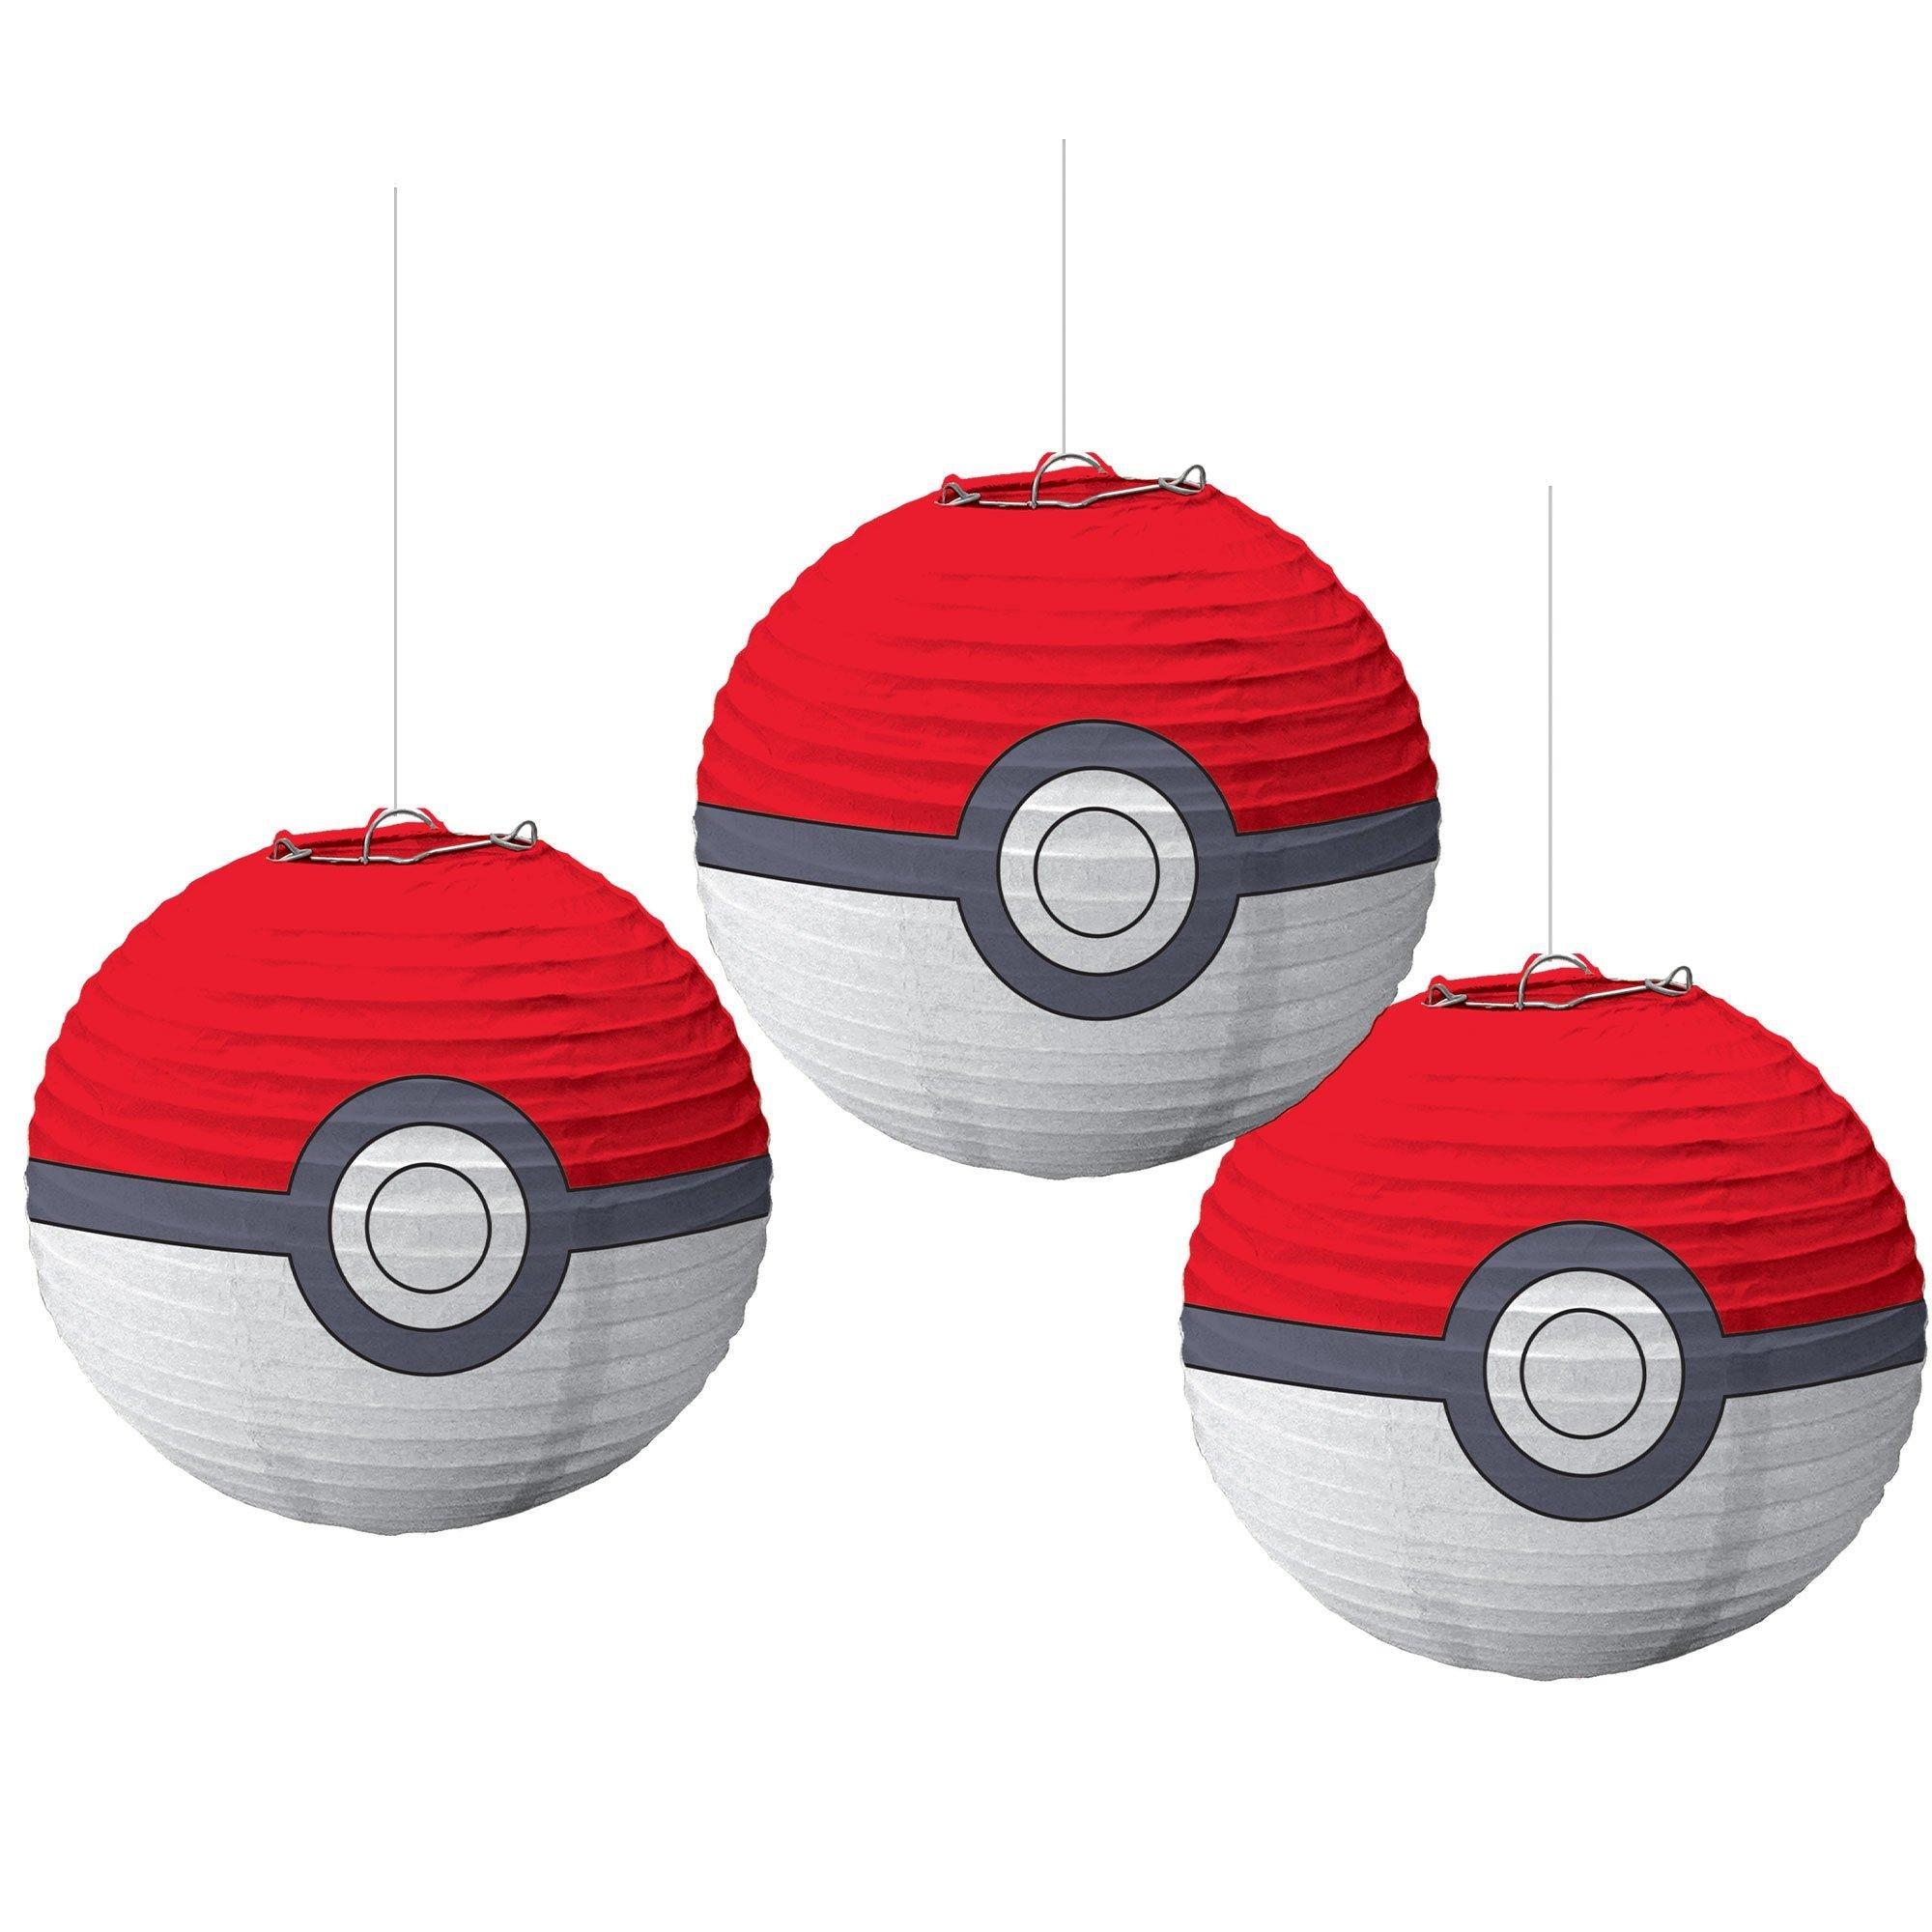 Pokémon Core Party Decorating Supplies Pack - Kit Includes Banners, Swirl Decorations & Centerpiece